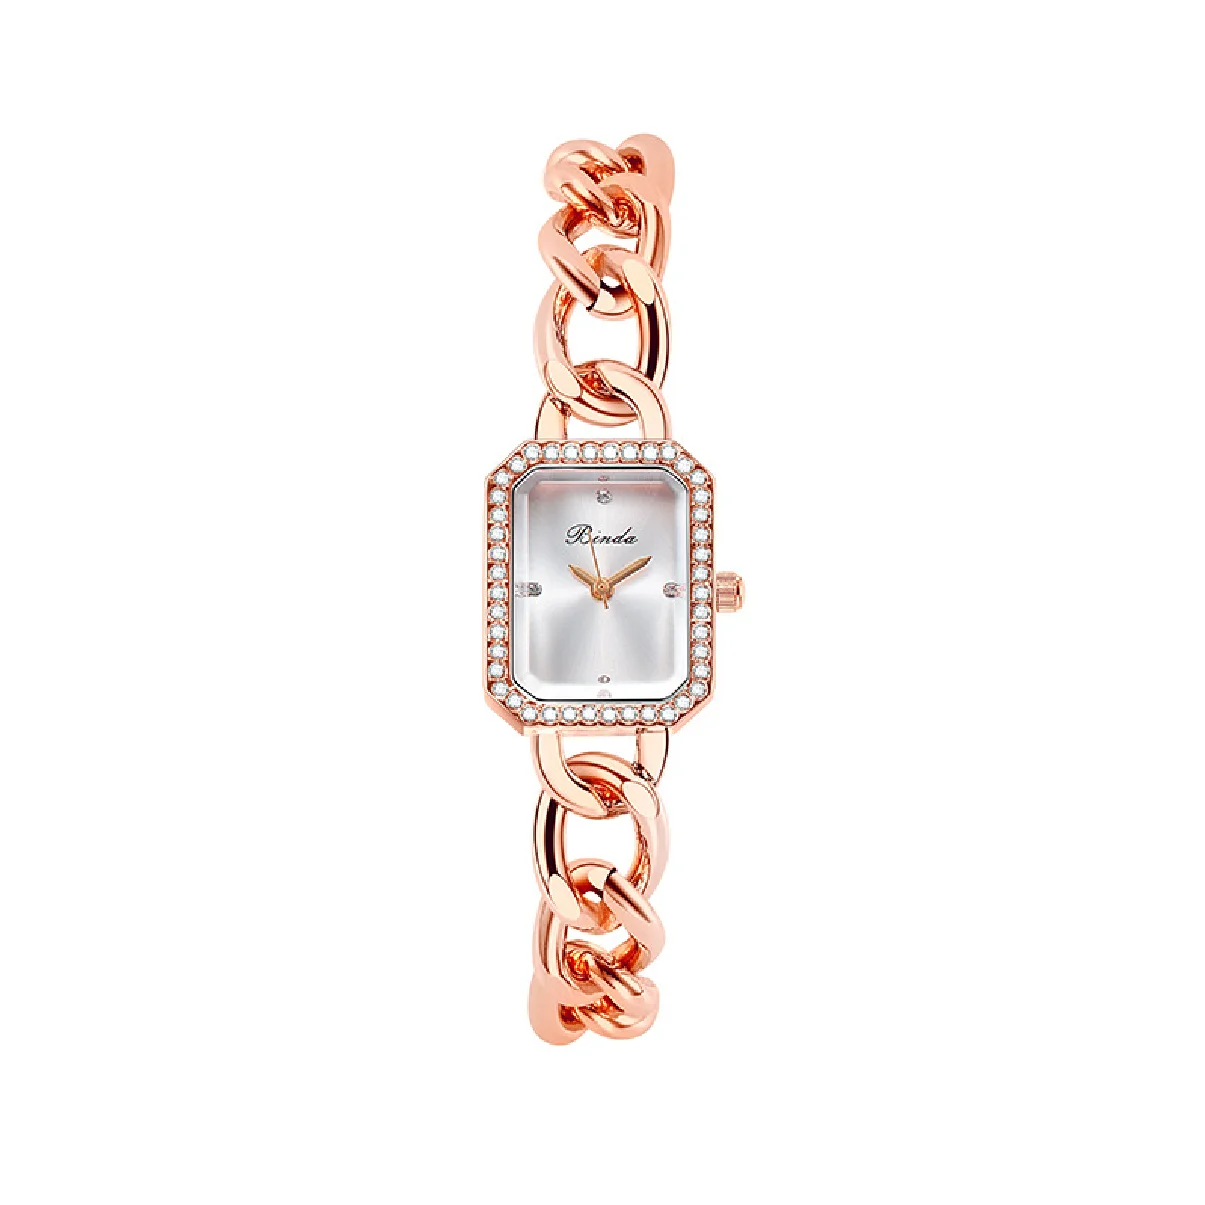 Small Dial Square Women Watches Luxury Brand Diamond Gold Black Female Wristwatches Cuban Bracelet Ladies Watches Montre Femme enlarge